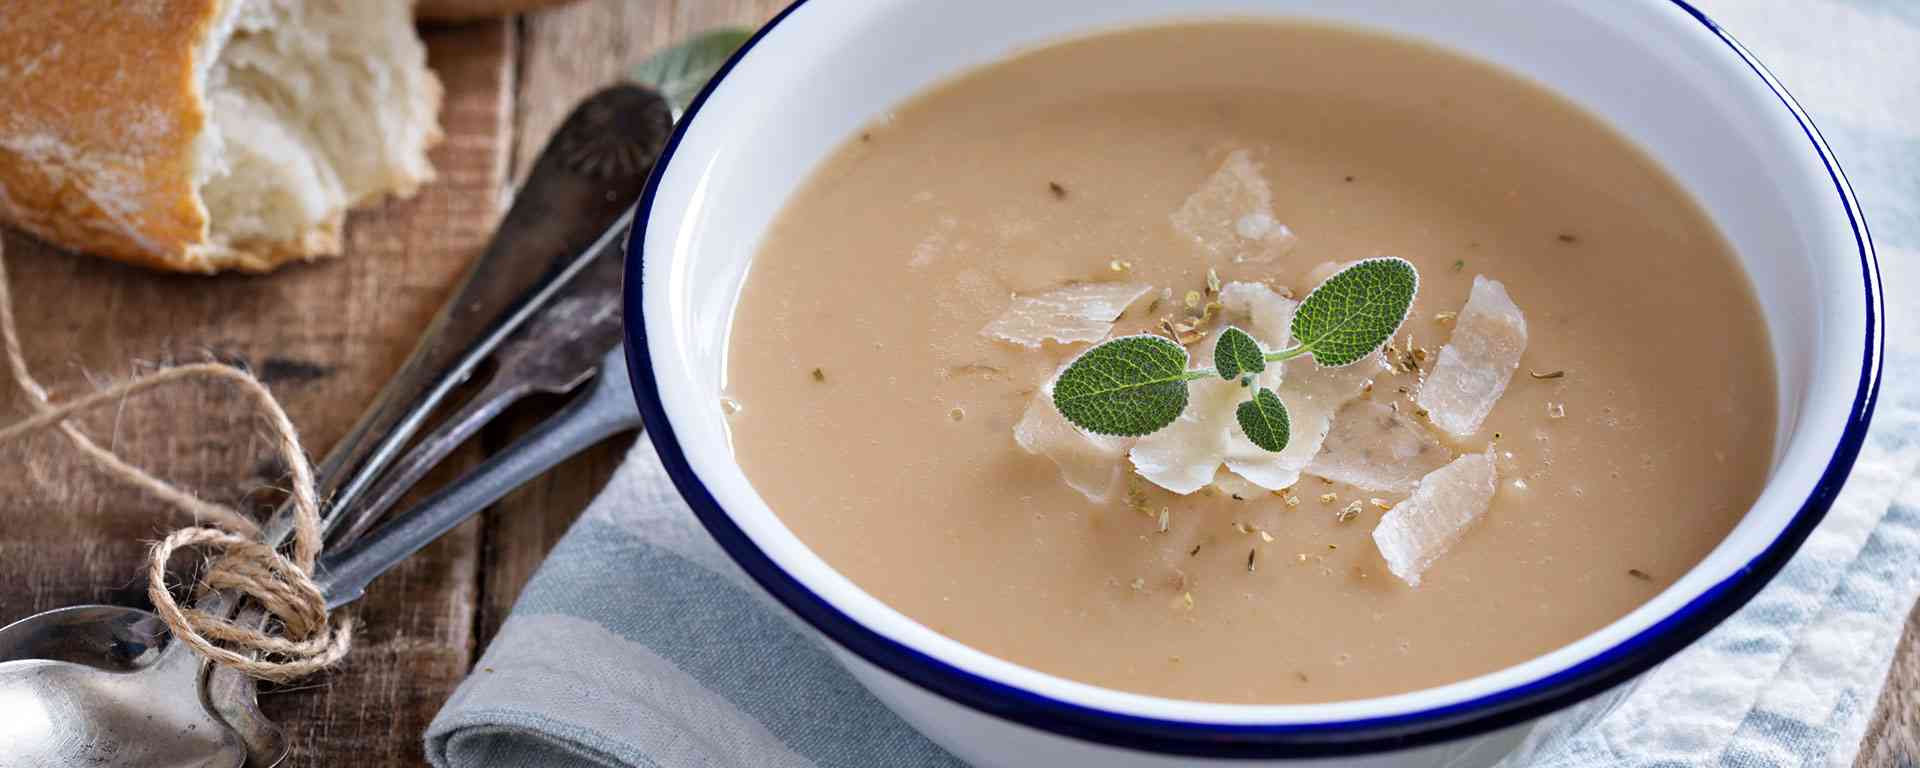 Photo of - Creamy Roasted Garlic Soup